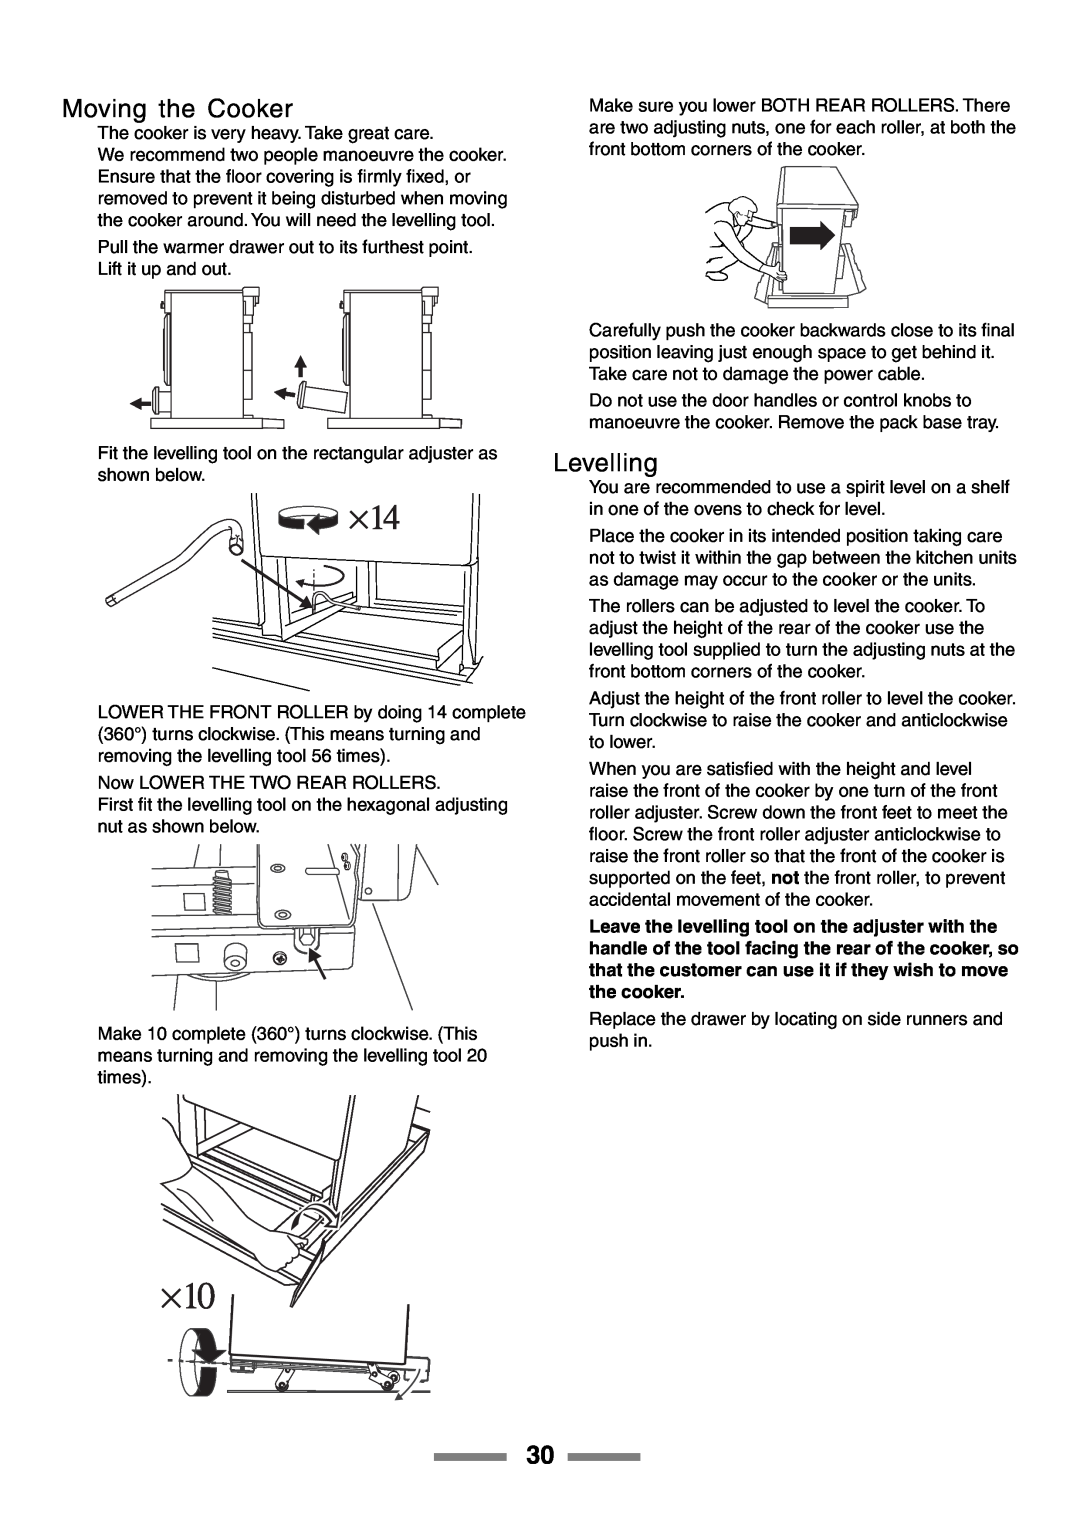 Rangemaster U105510-01 manual Moving the Cooker, Levelling 